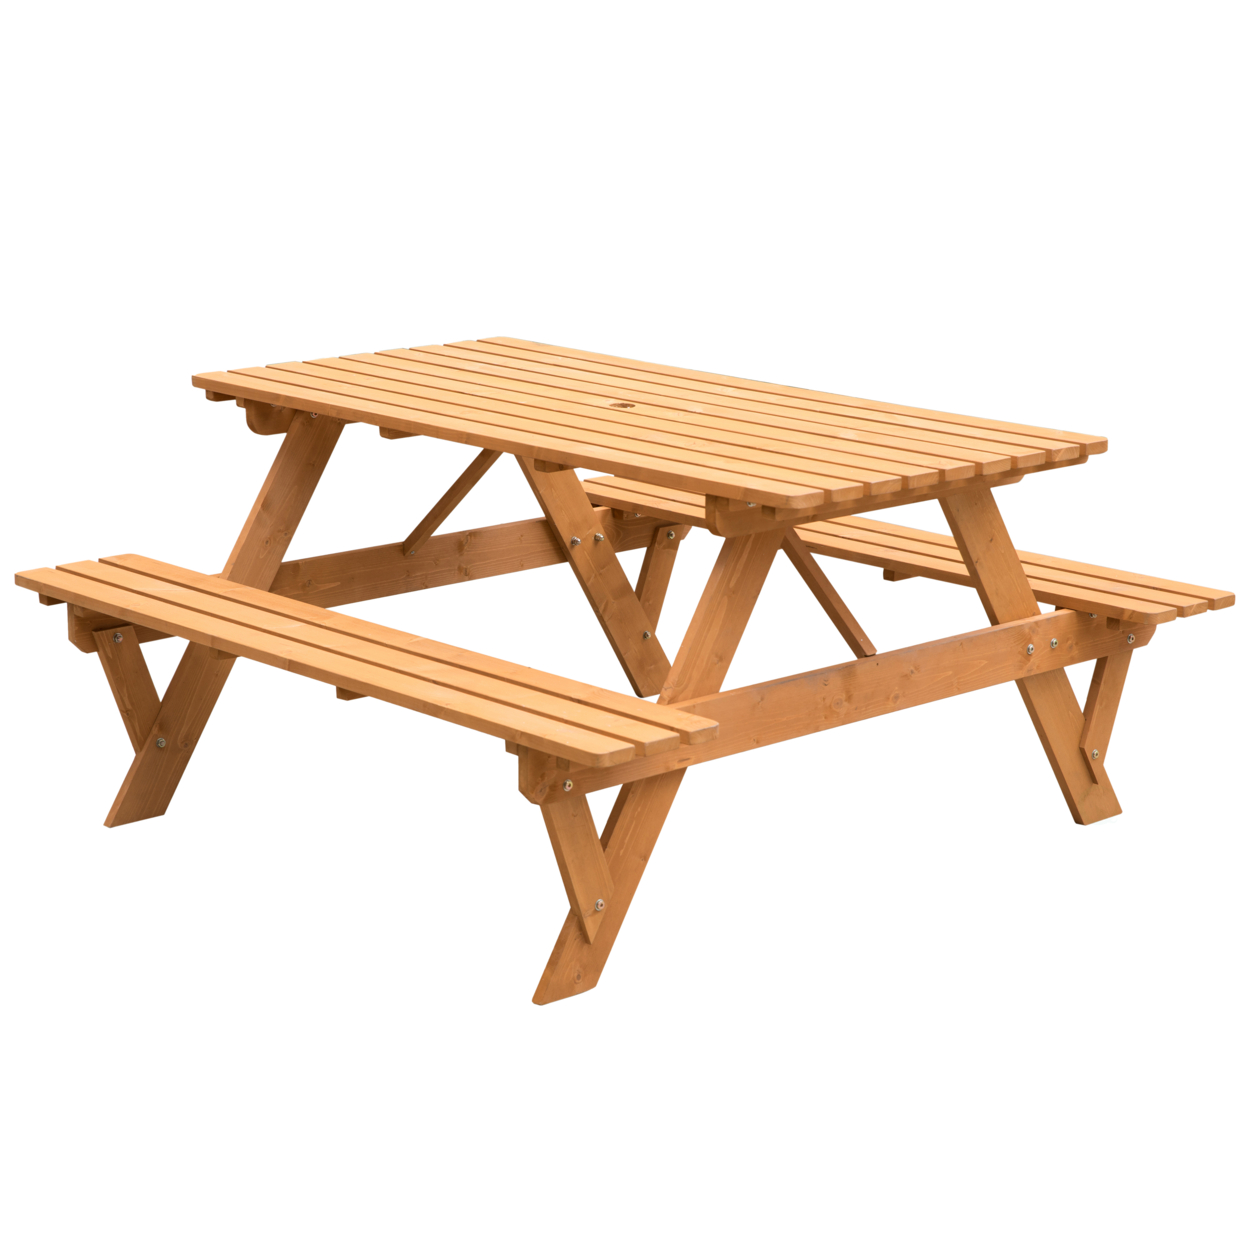 Outdoor Wooden Patio Deck Garden 6-Person Picnic Table, For Backyard, Garden - Stained